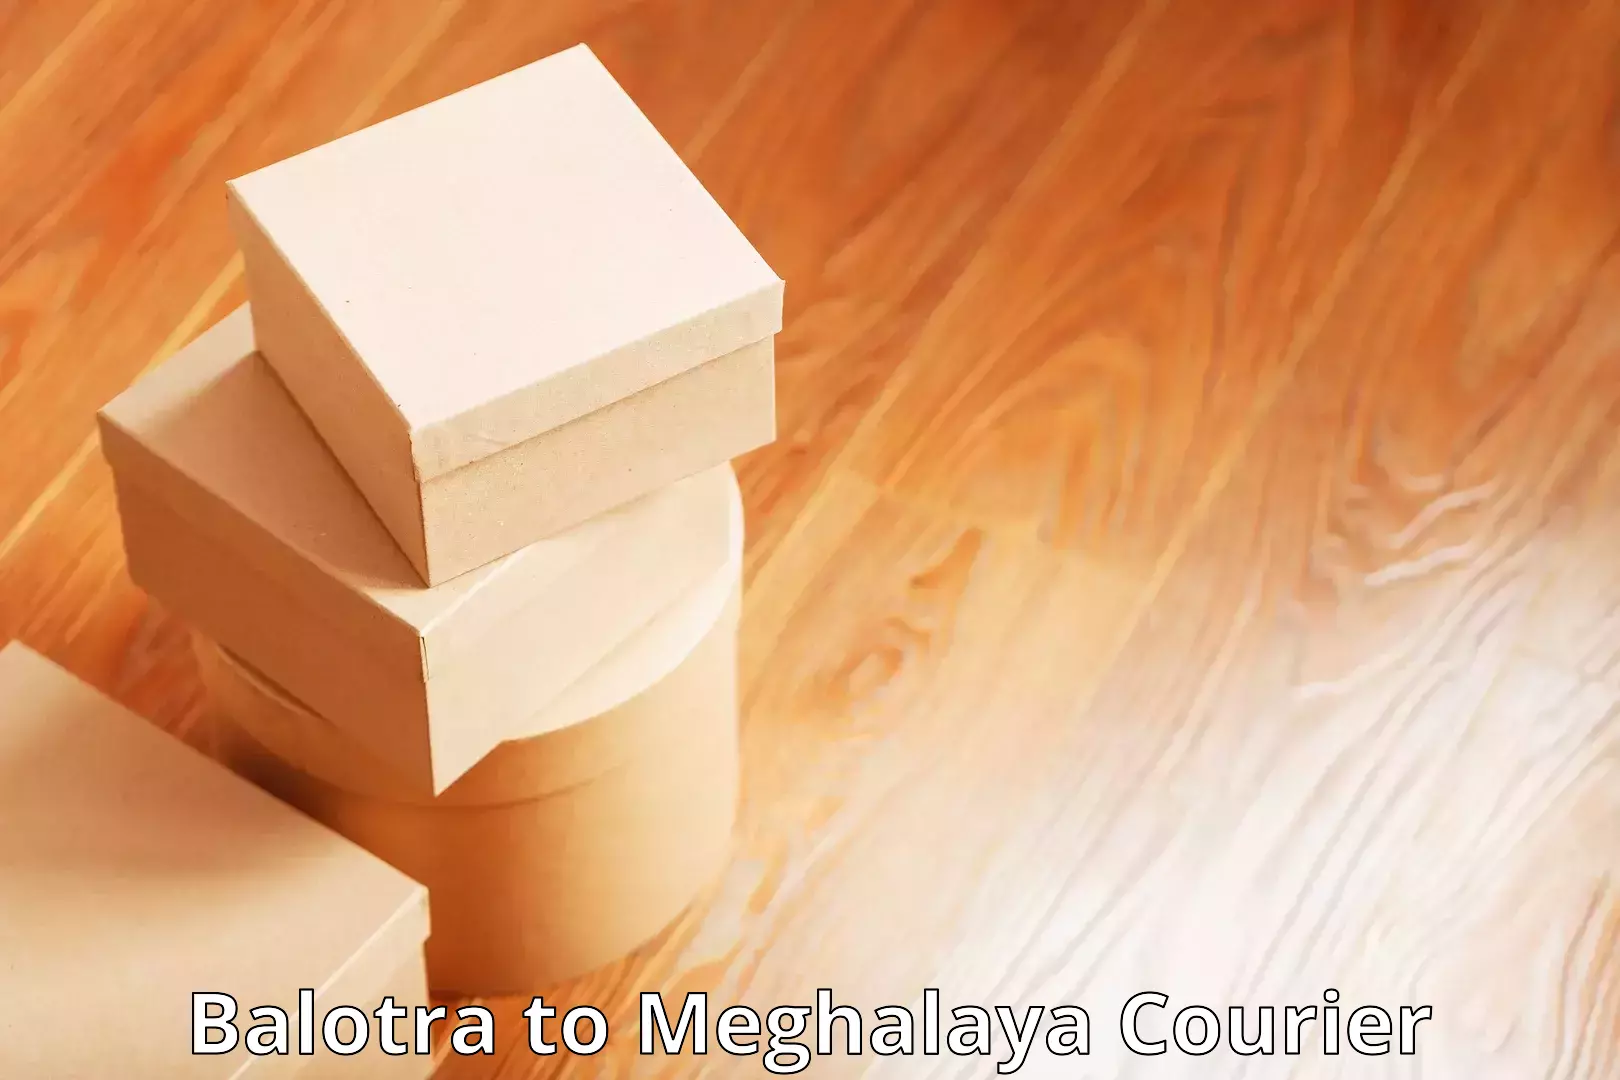 Courier service partnerships Balotra to Meghalaya